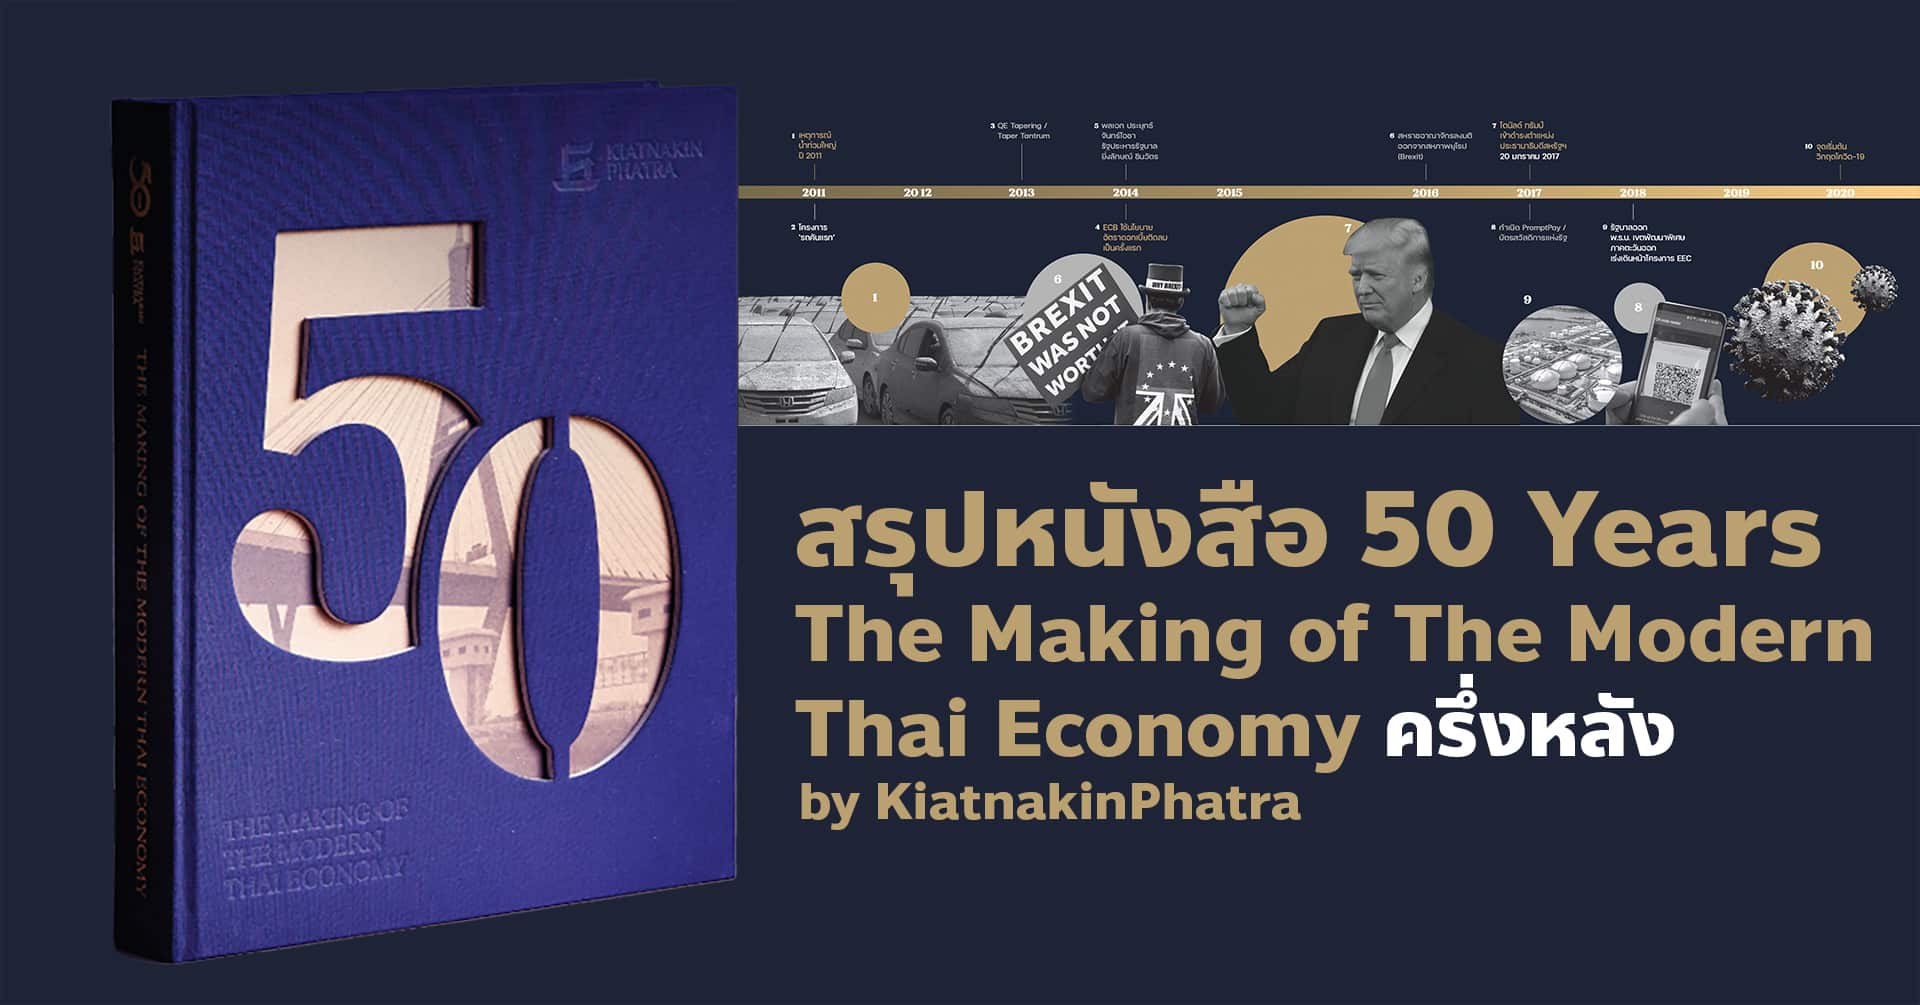 50 Years The Making of The Modern Thai Economy ธนาคารเกียรตินาคินภัทร ครึ่งหลัง